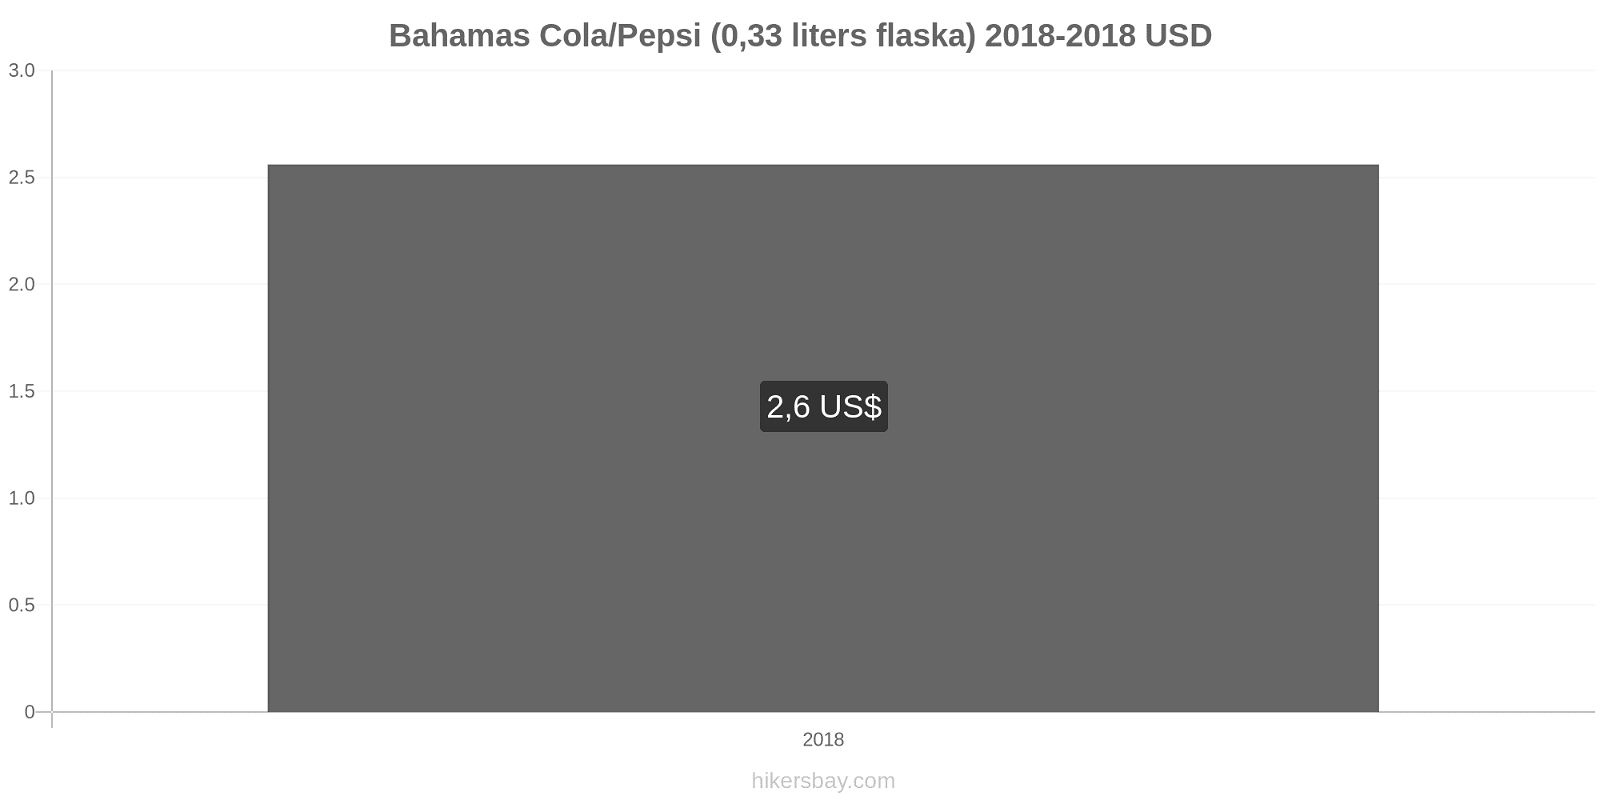 Bahamas prisändringar Coca-Cola/Pepsi (0.33 liters flaska) hikersbay.com